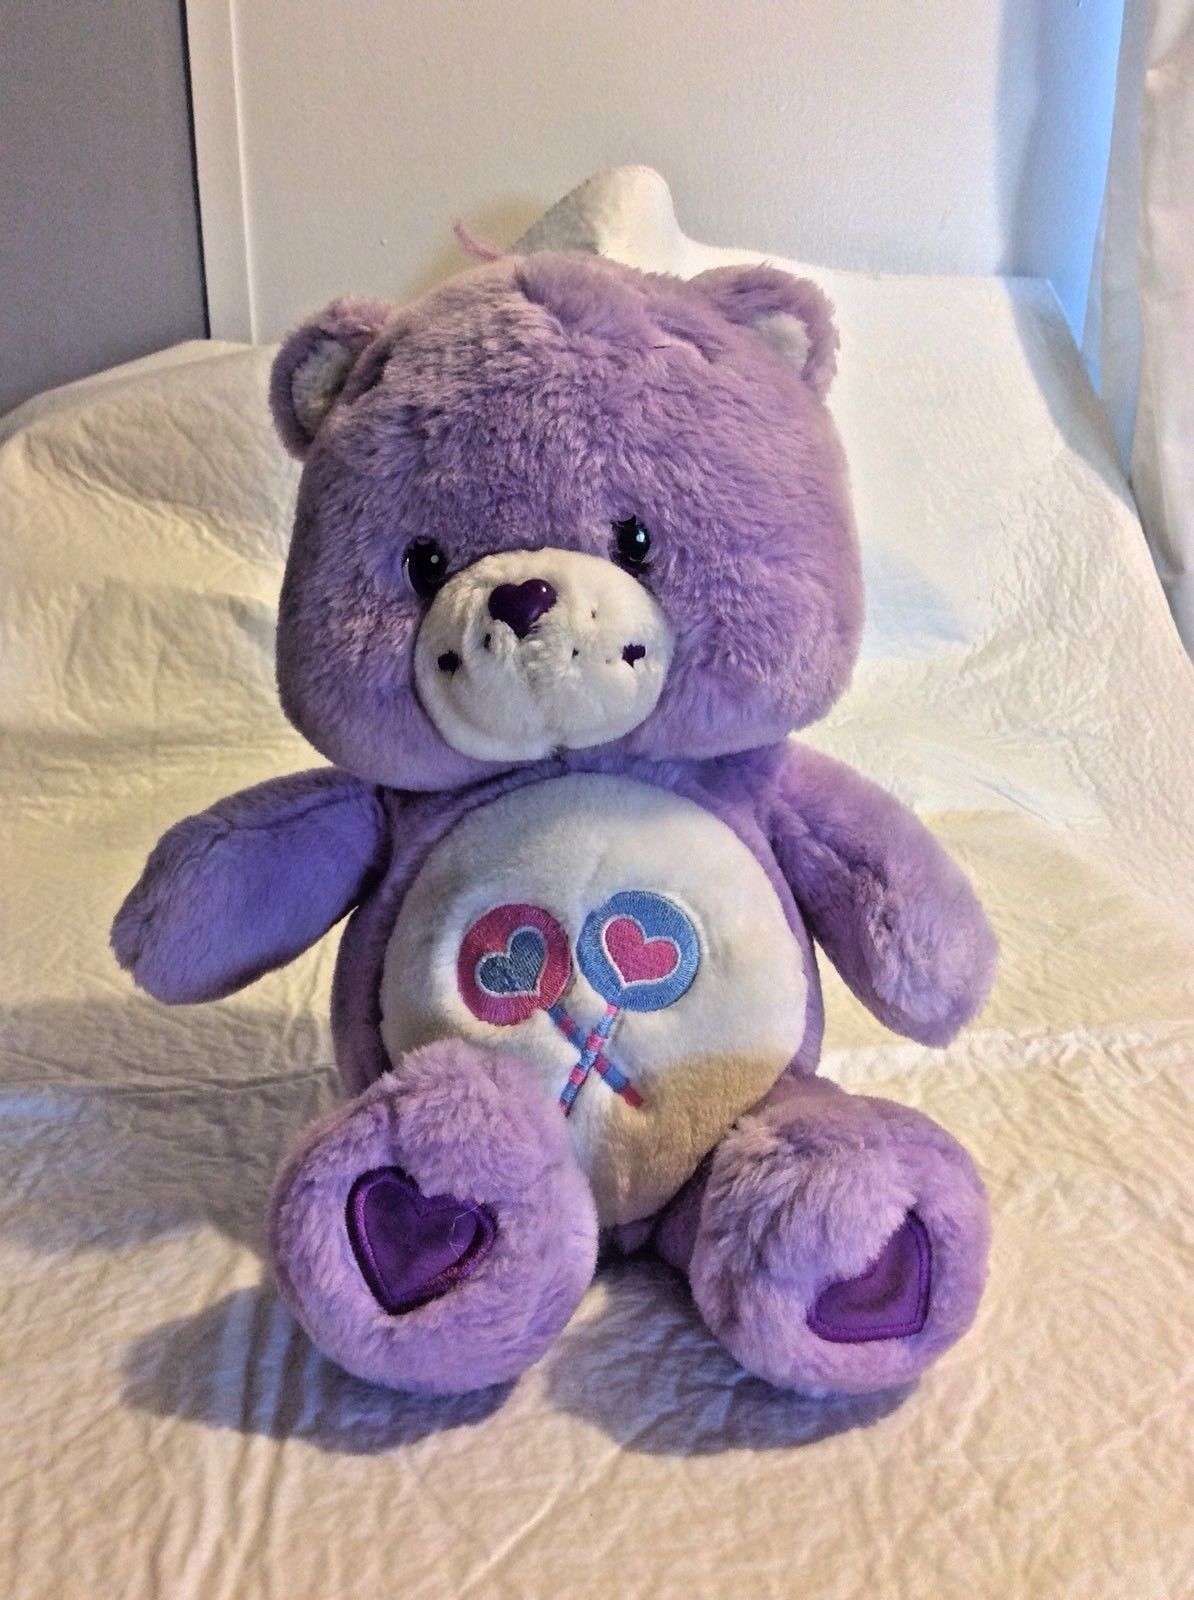 2003 Care Bears Share Bear 13” Talking Singing Plush Stuffed Animal Works Great